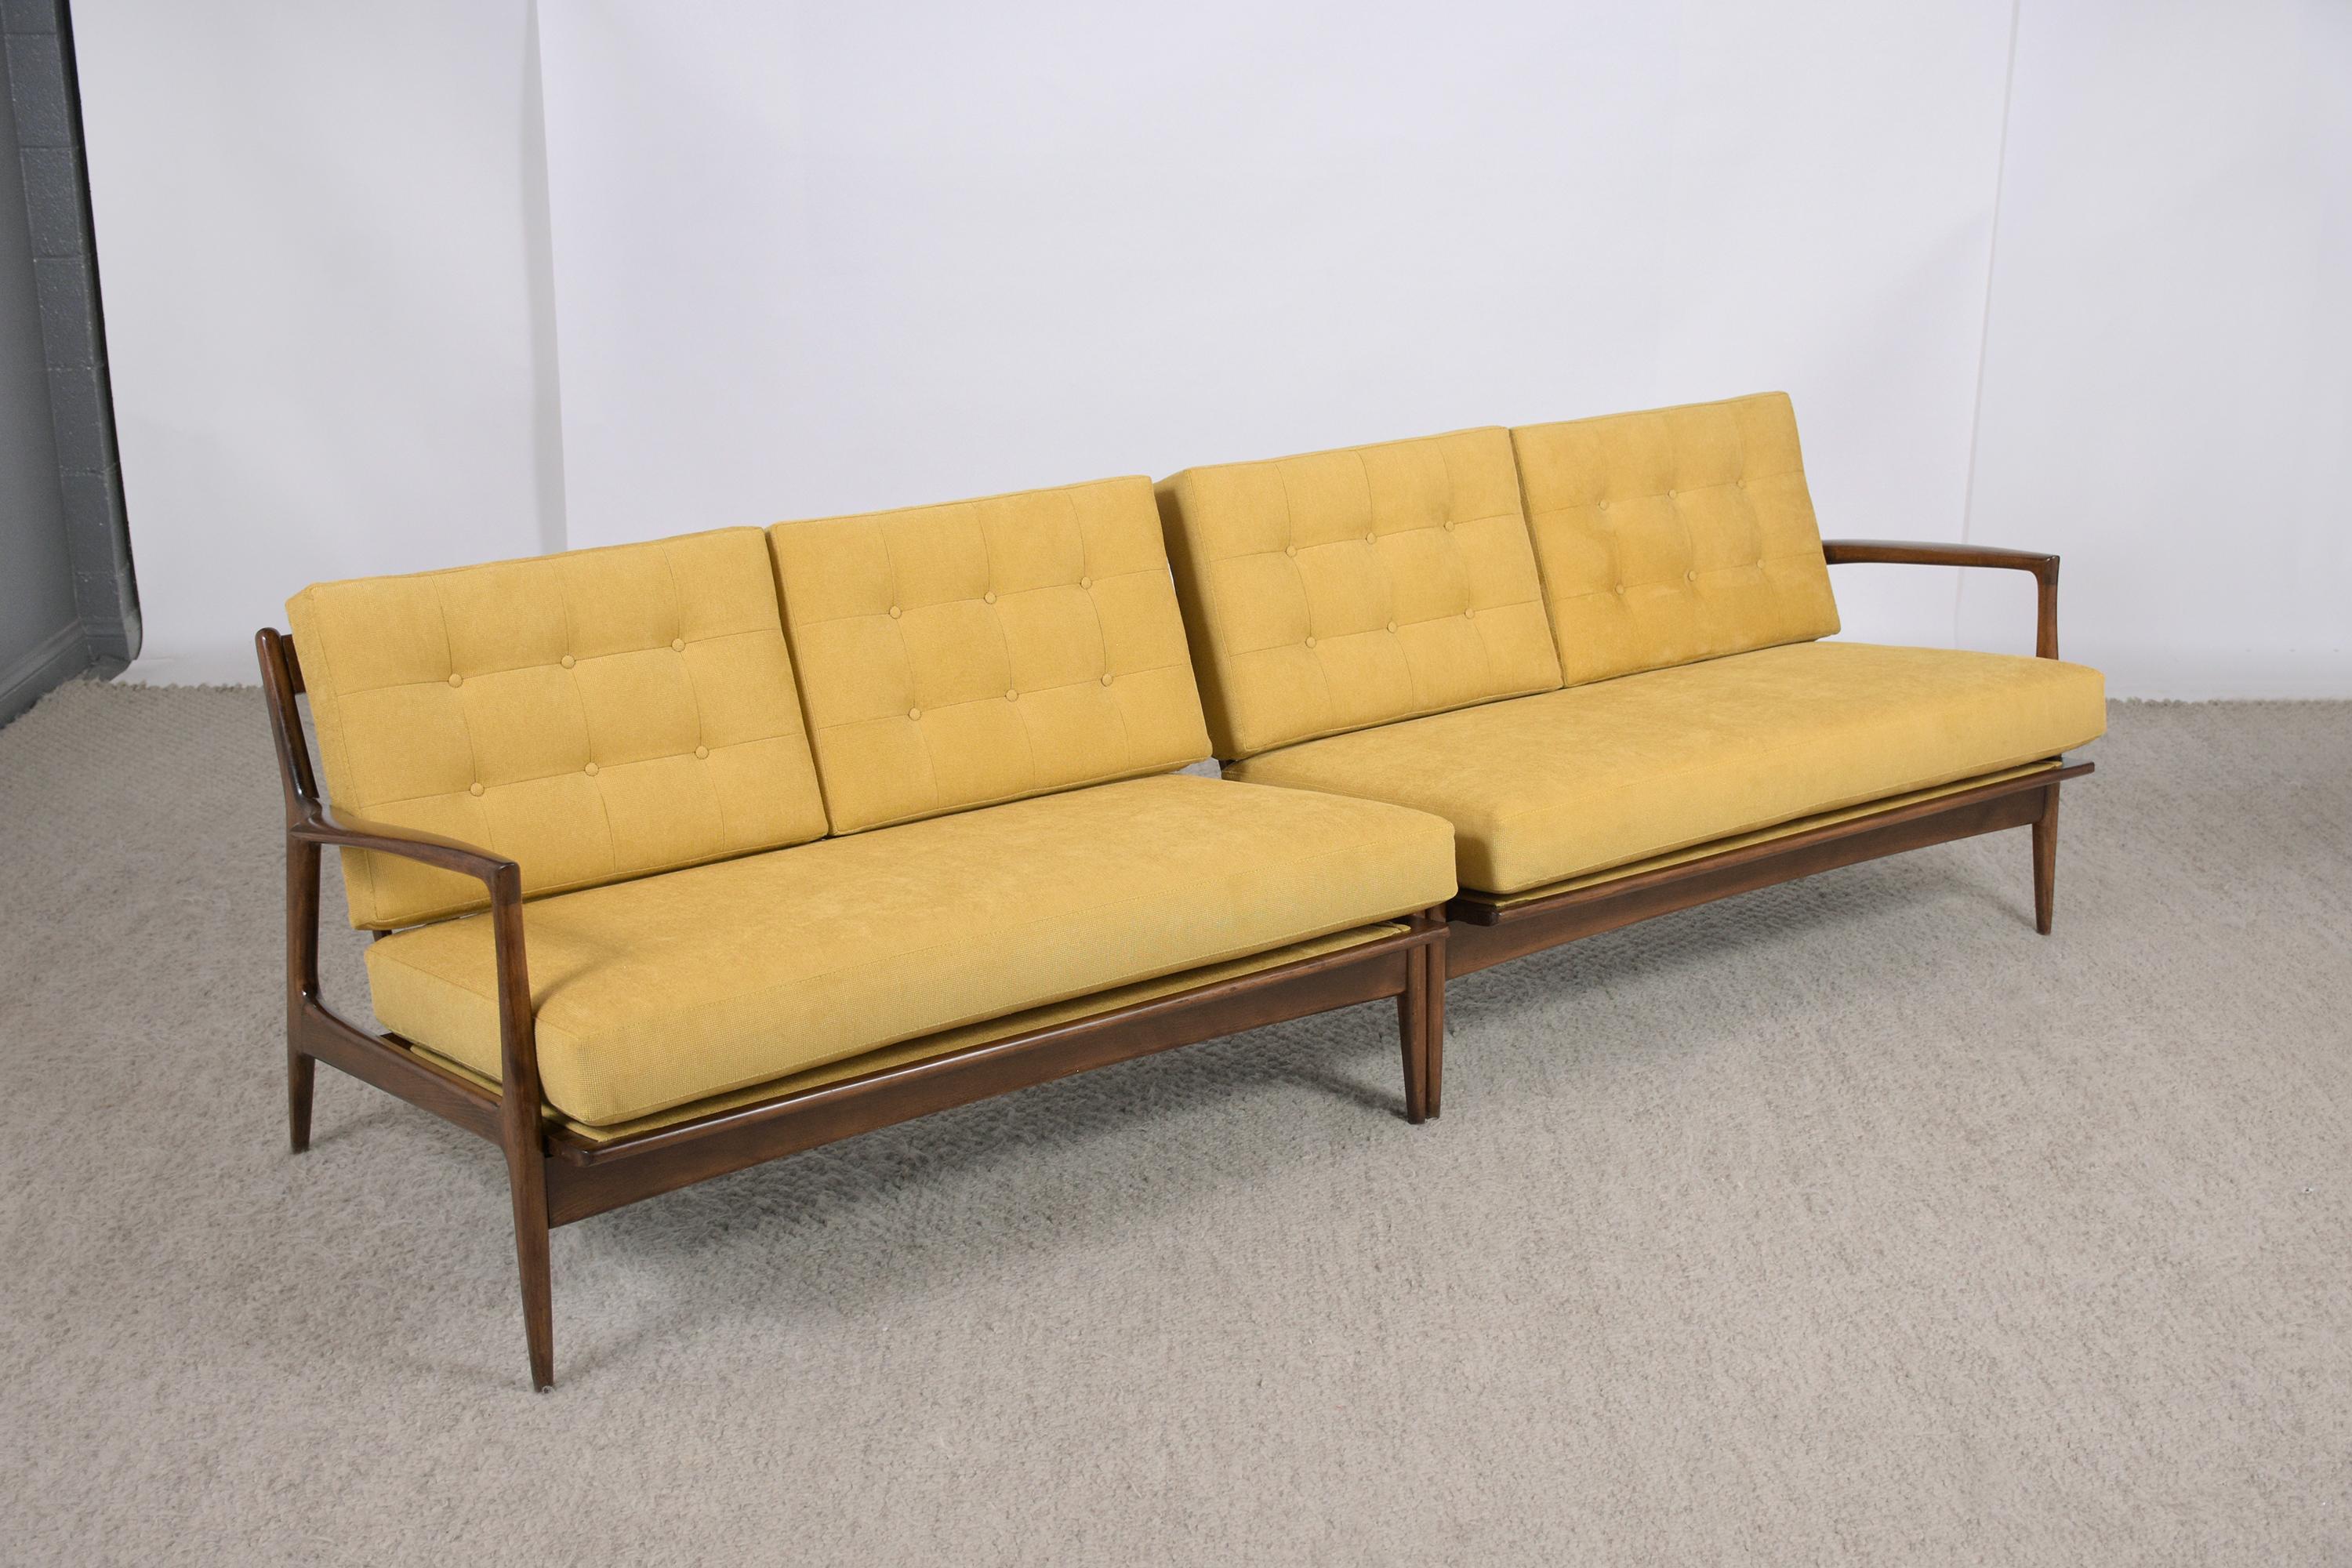 Lacquer 1960s Danish Mid-Century Modern Teak Sectional Sofa in Mustard Yellow